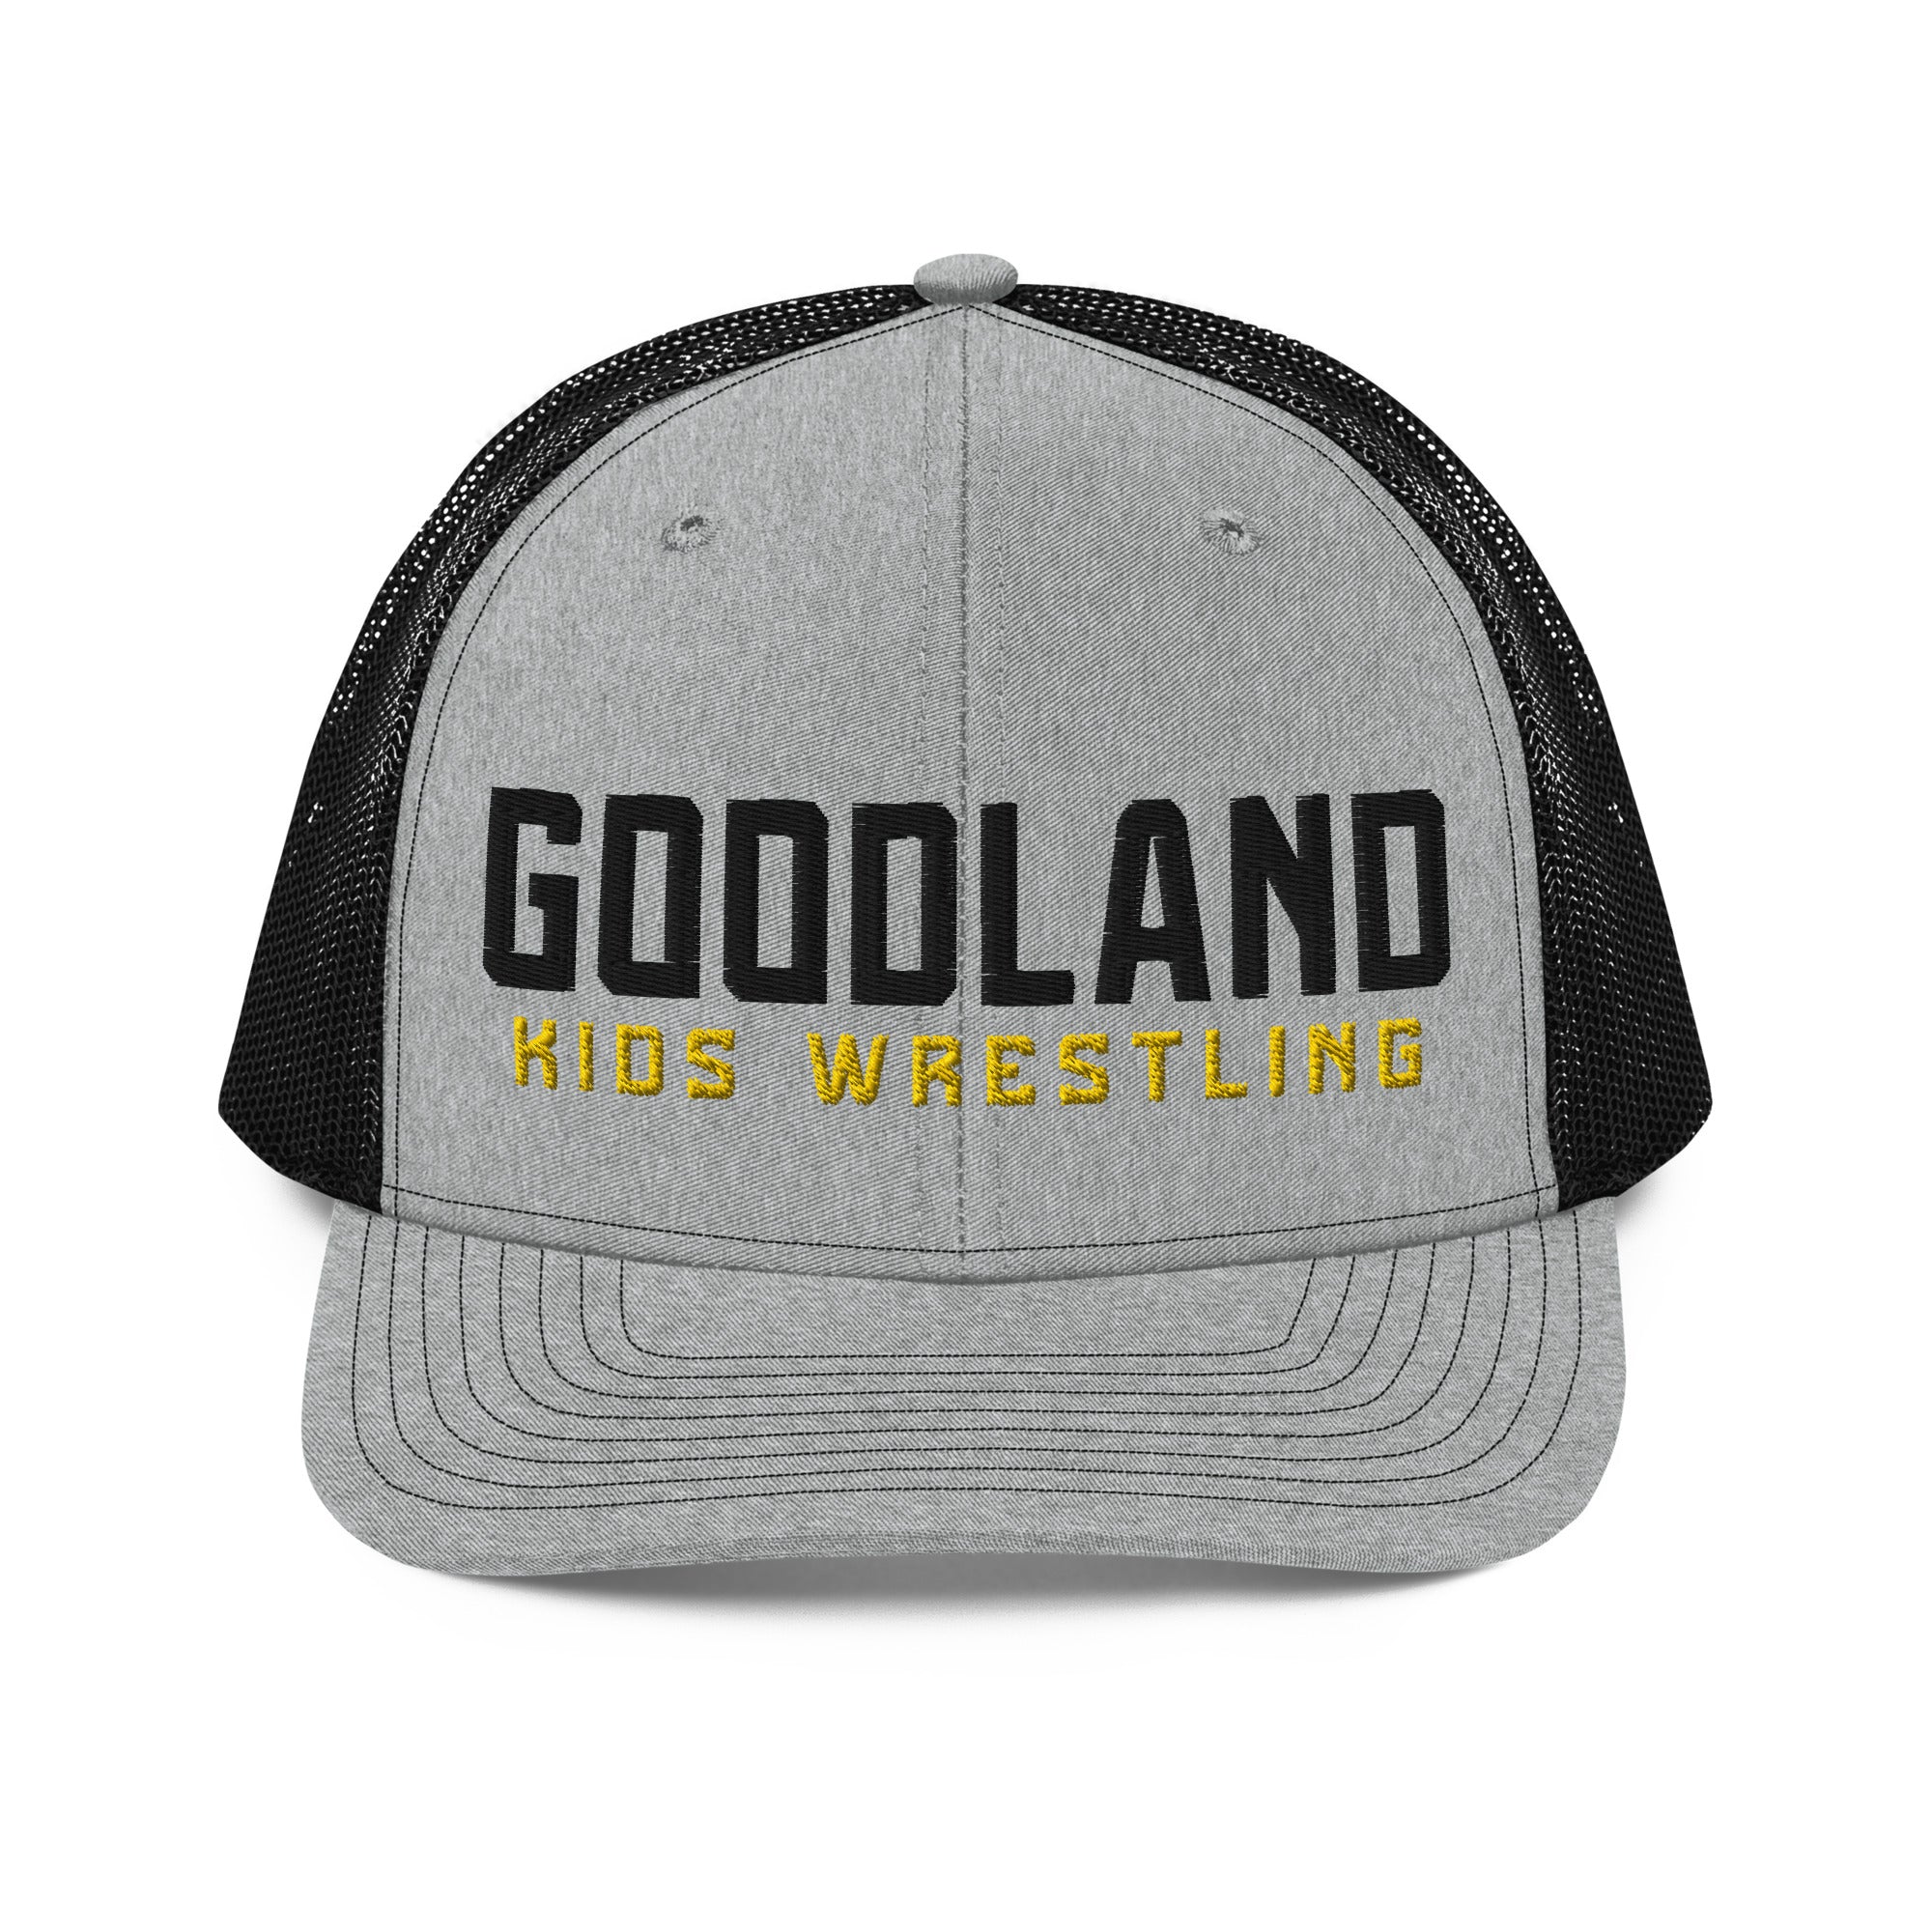 Goodland Kids Wrestling Snapback Trucker Cap